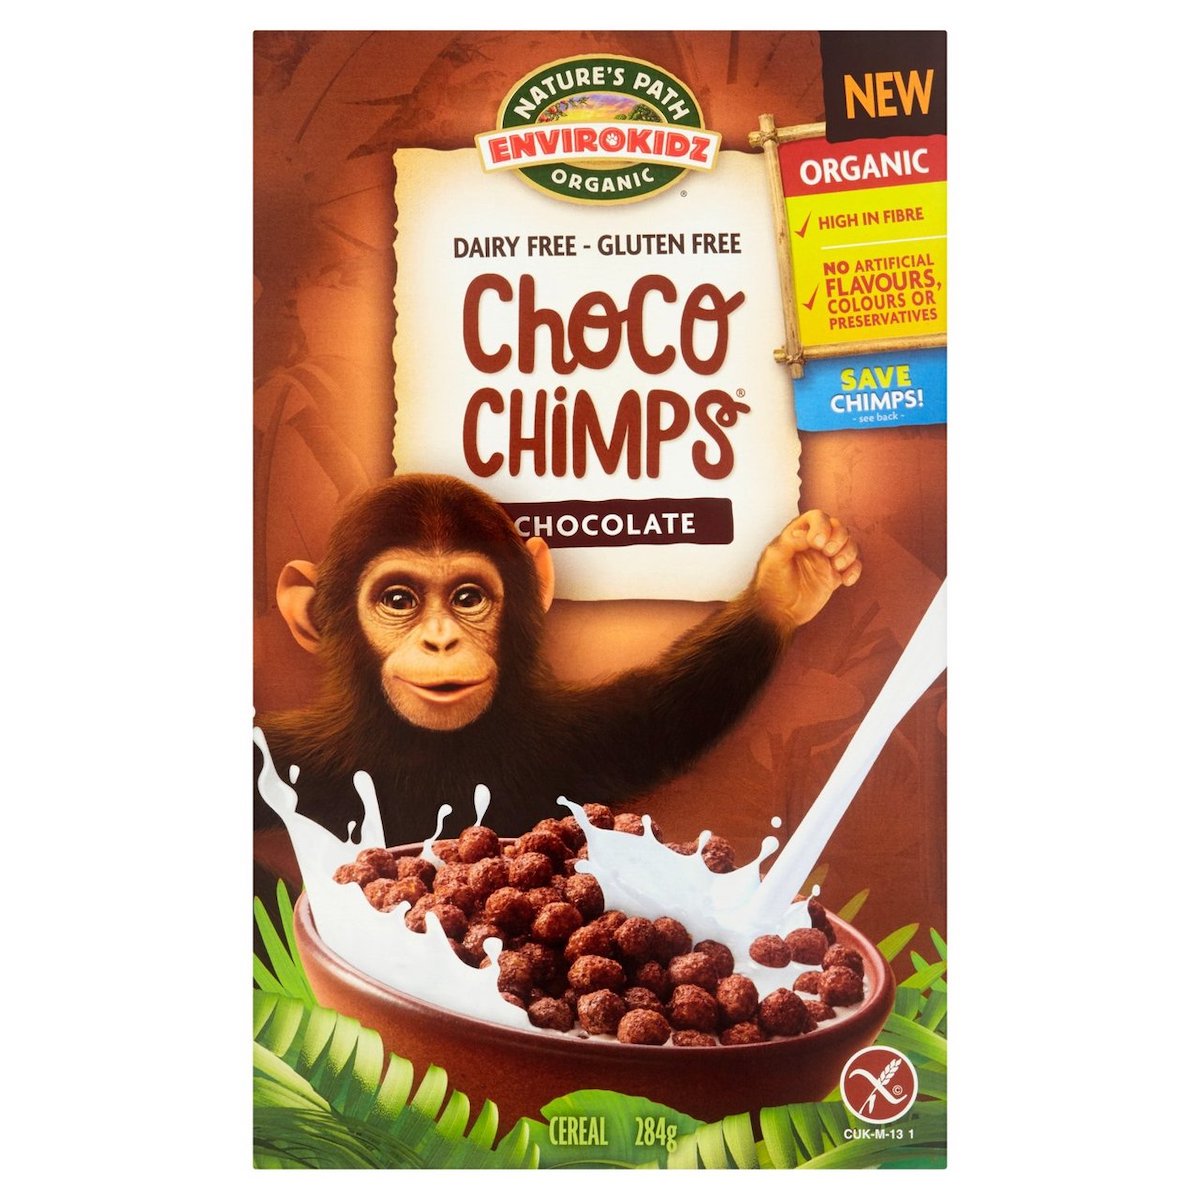 Nature's Path Organic Gluten Free Chocolate Choco Chimps Cereal 284g